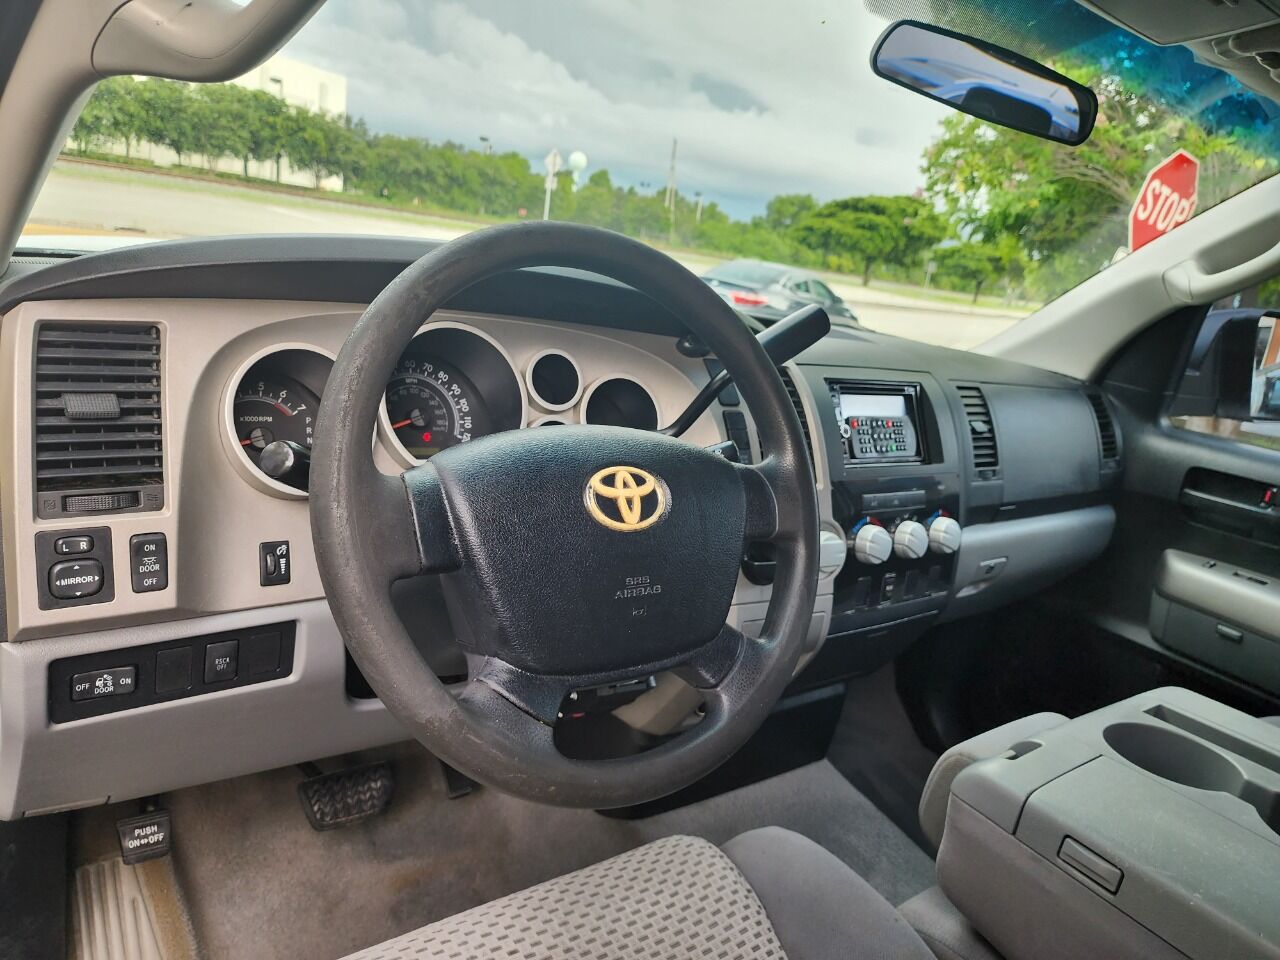 2008 Toyota Tundra Pickup - $8,950